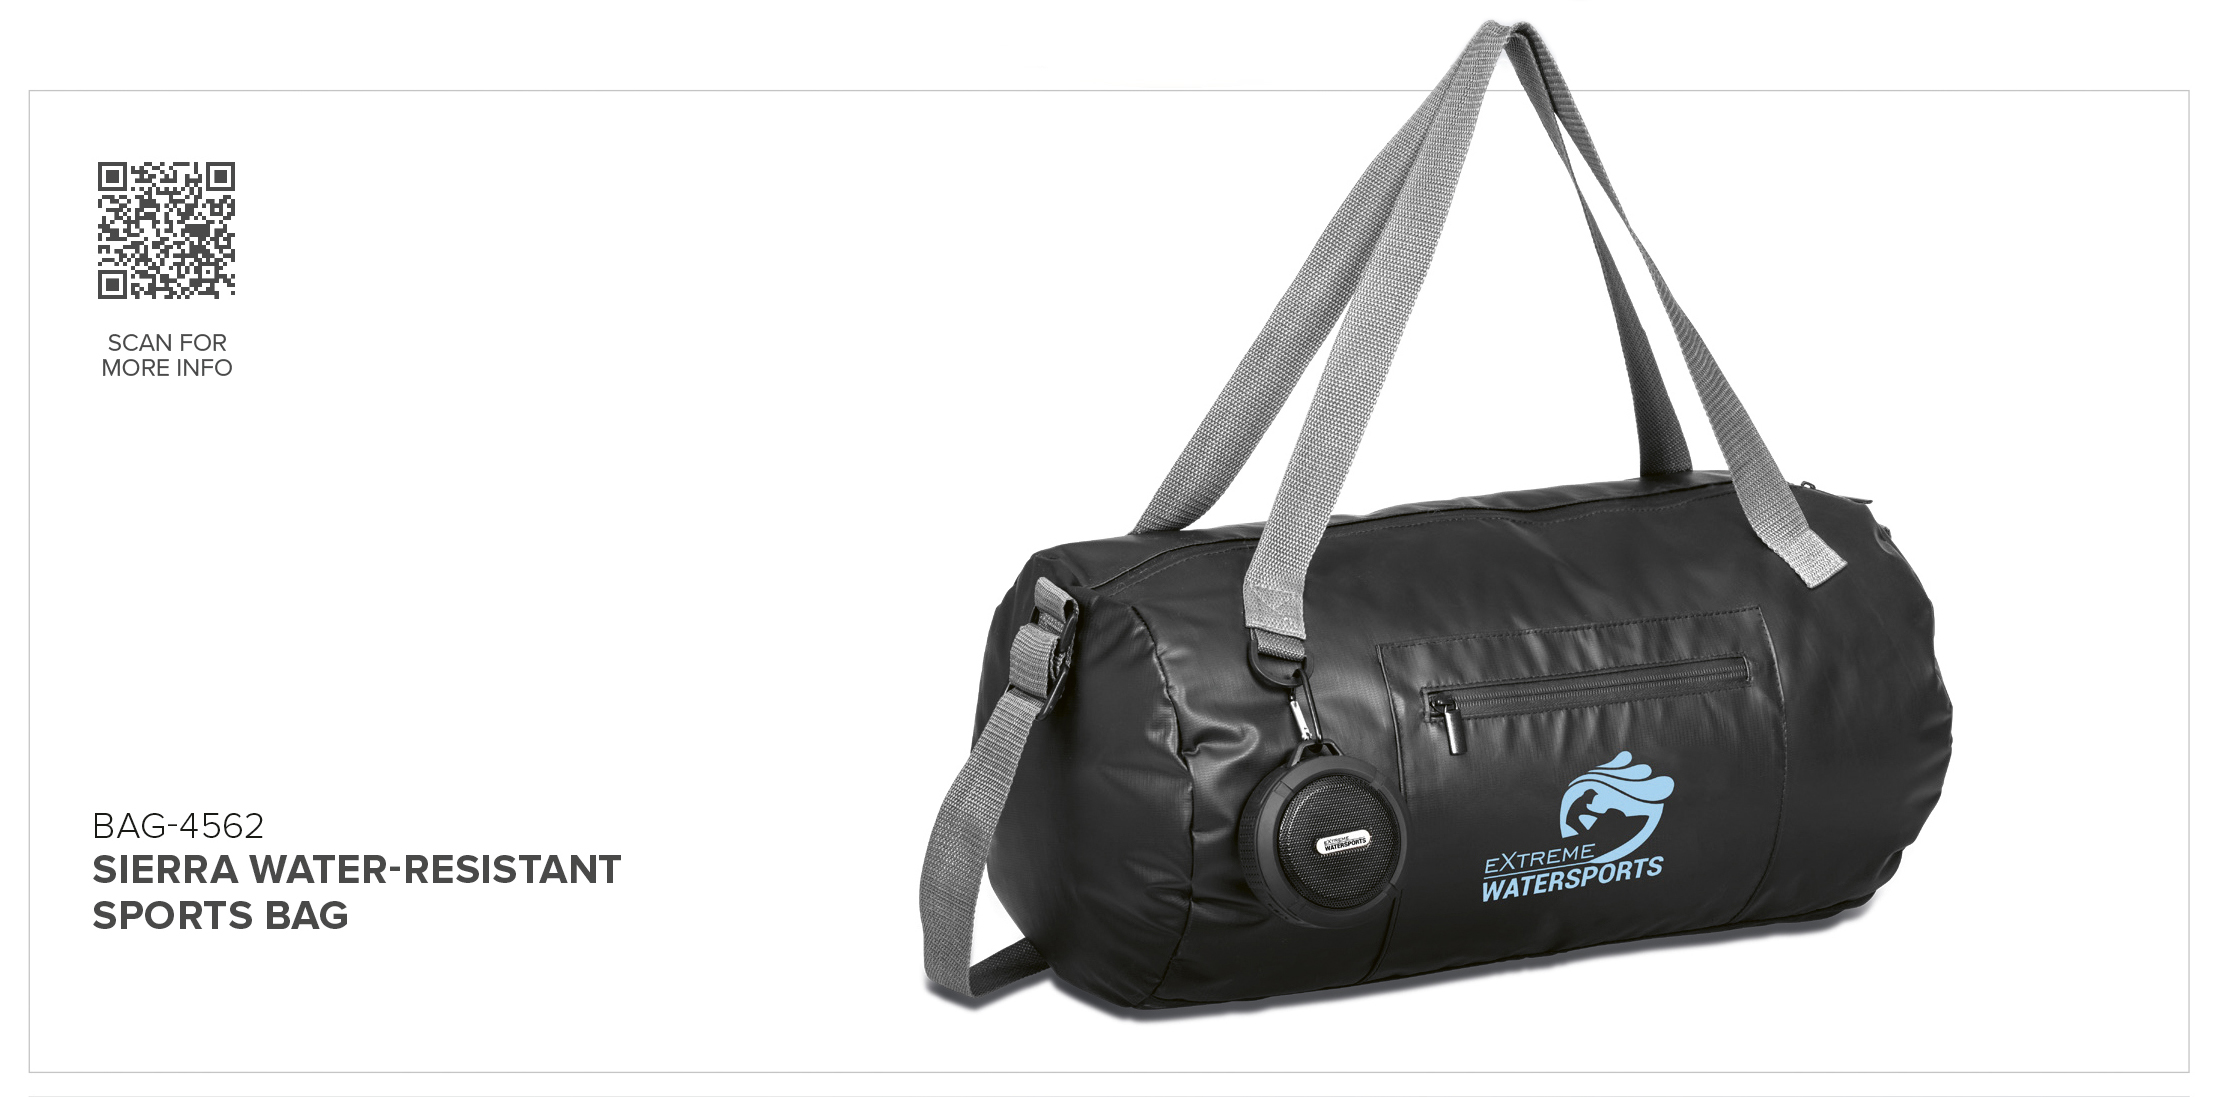 BAG-4562 - Sierra Water-Resistant Sports Bag - Catalogue Image